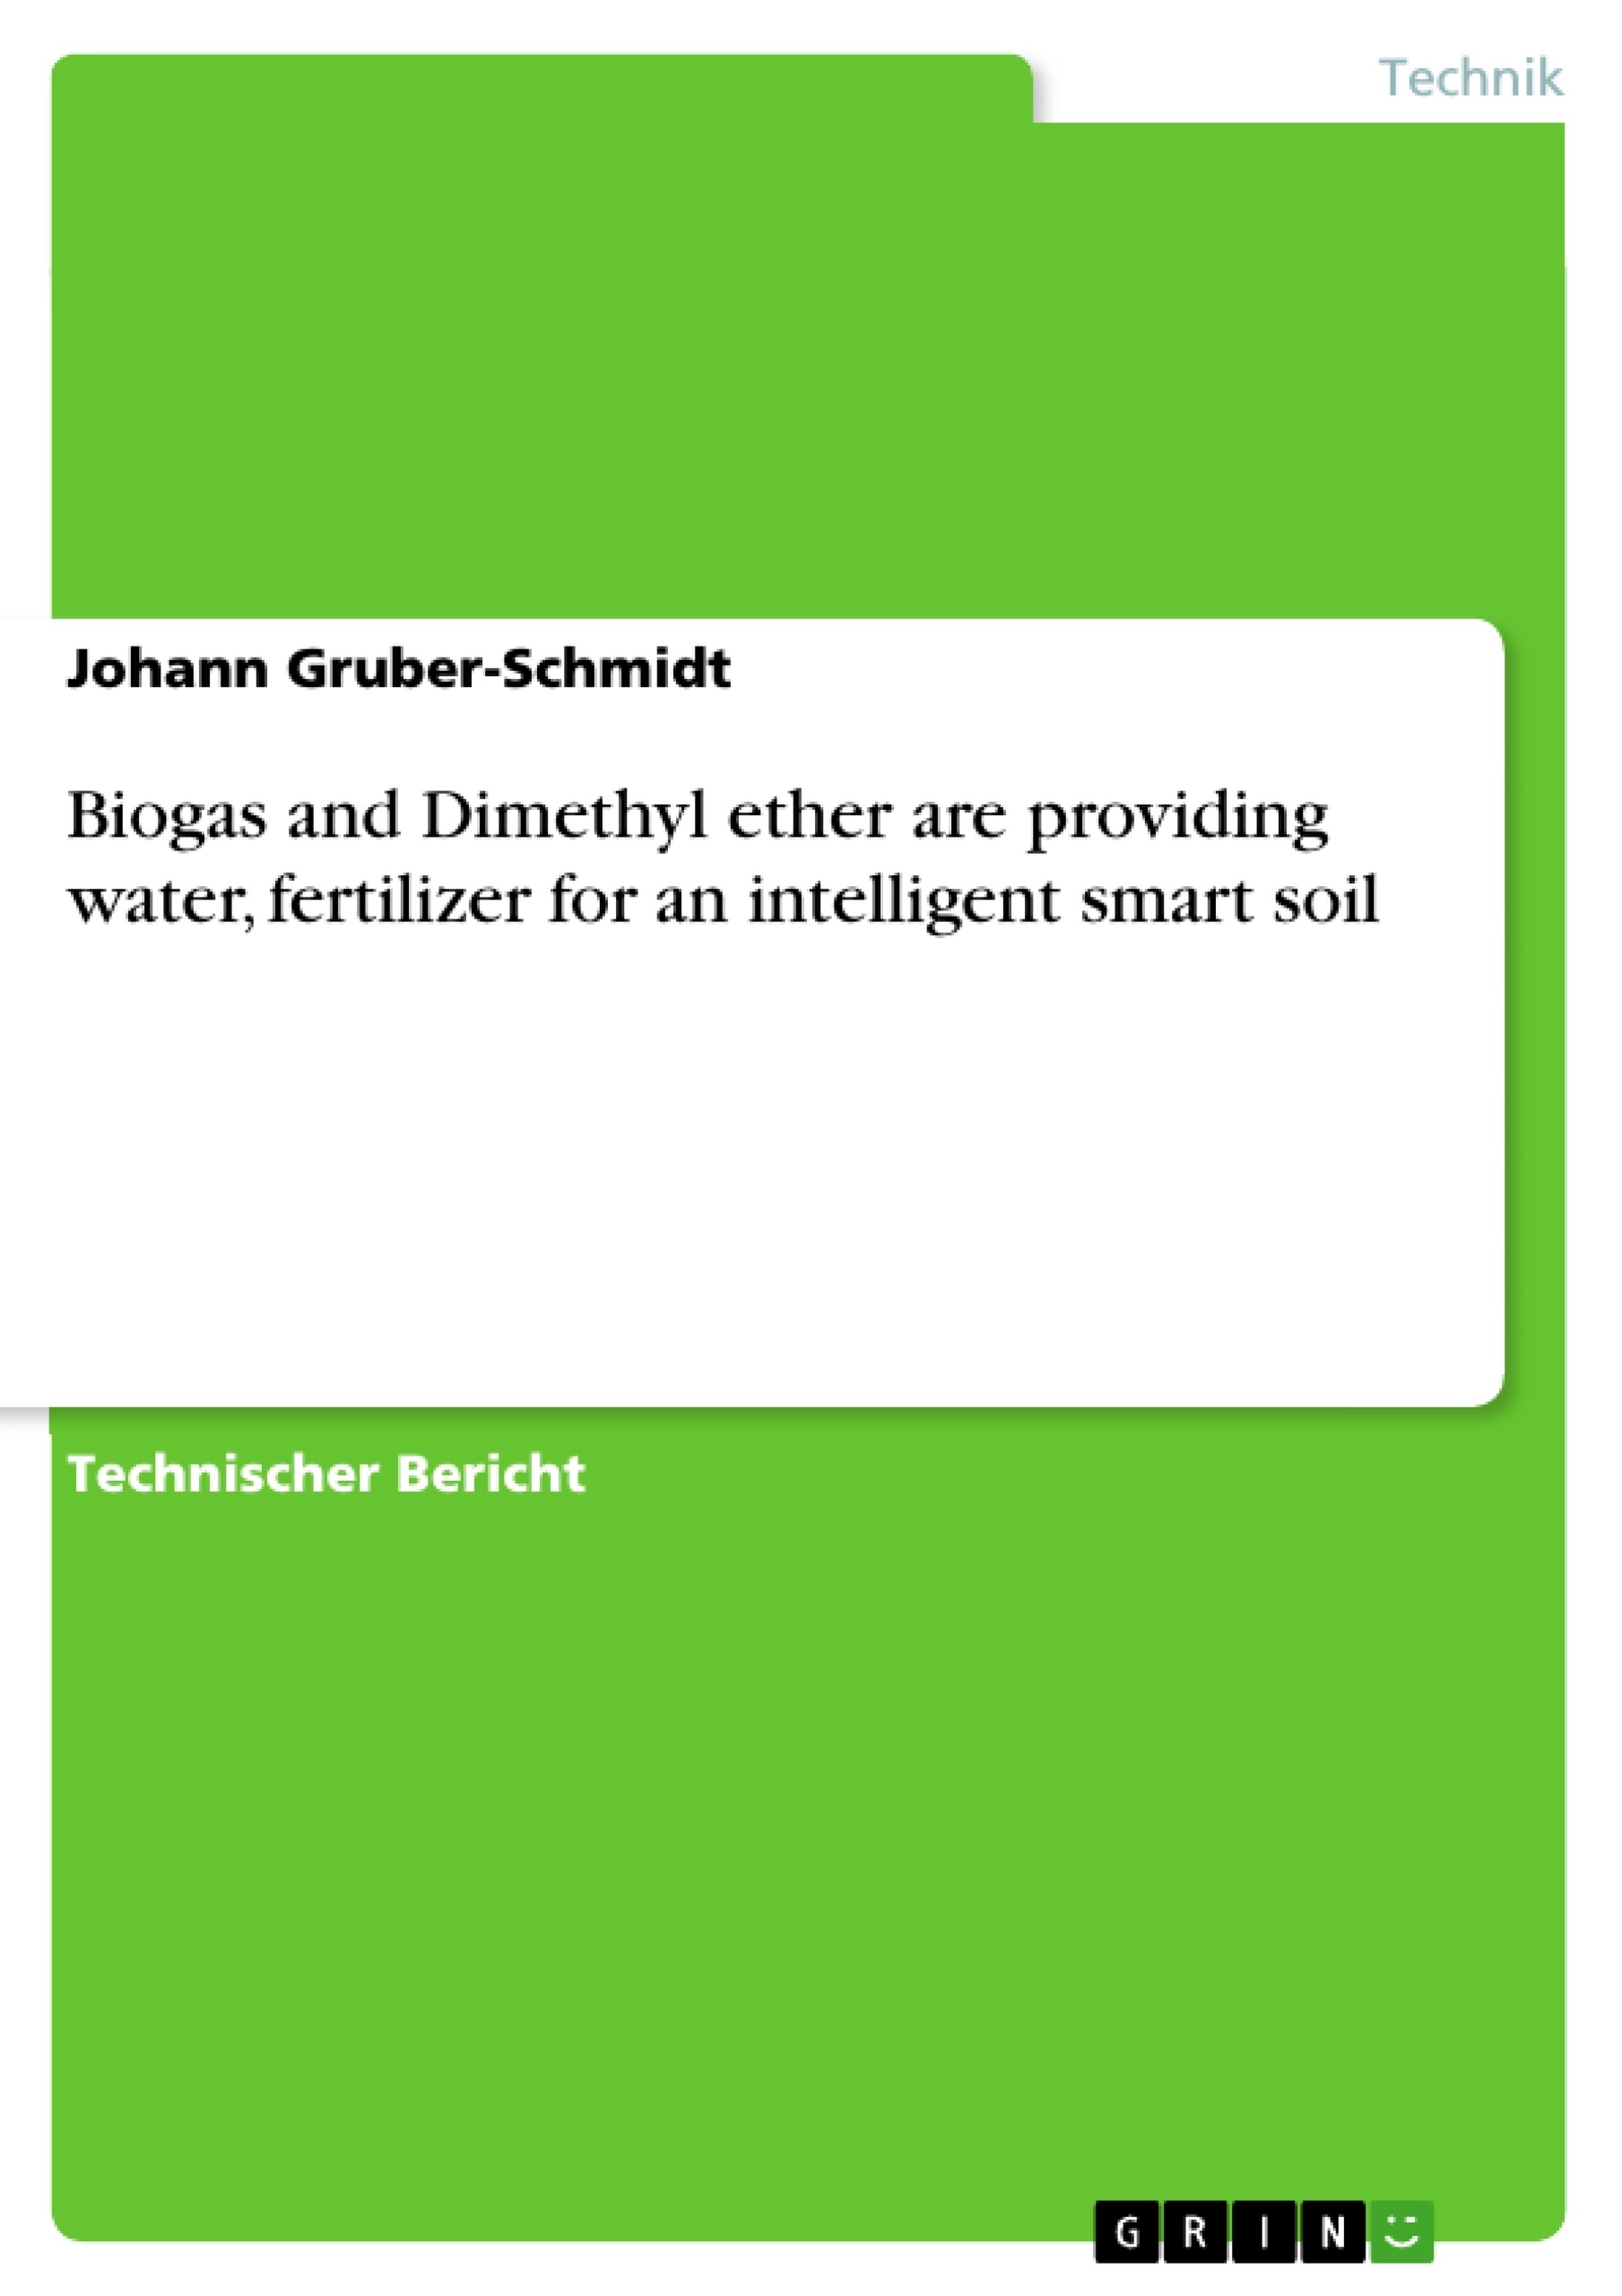 Titel: Biogas and Dimethyl ether are providing water, fertilizer for an intelligent smart soil